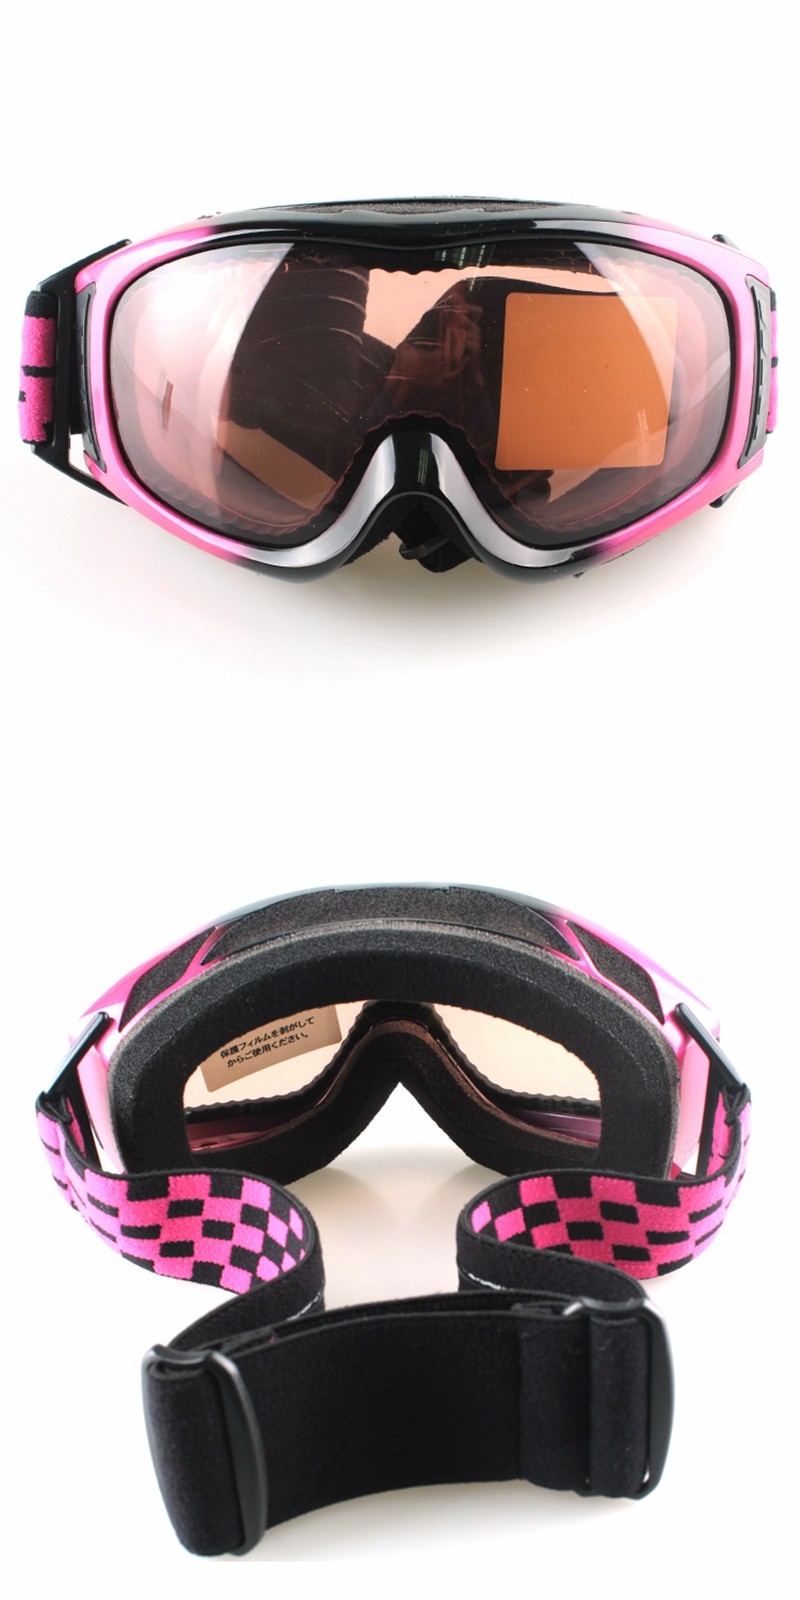 Outdoor-Sports-Goggles-Glasses-Fashion-Antifog-Ski-Goggles-1000849